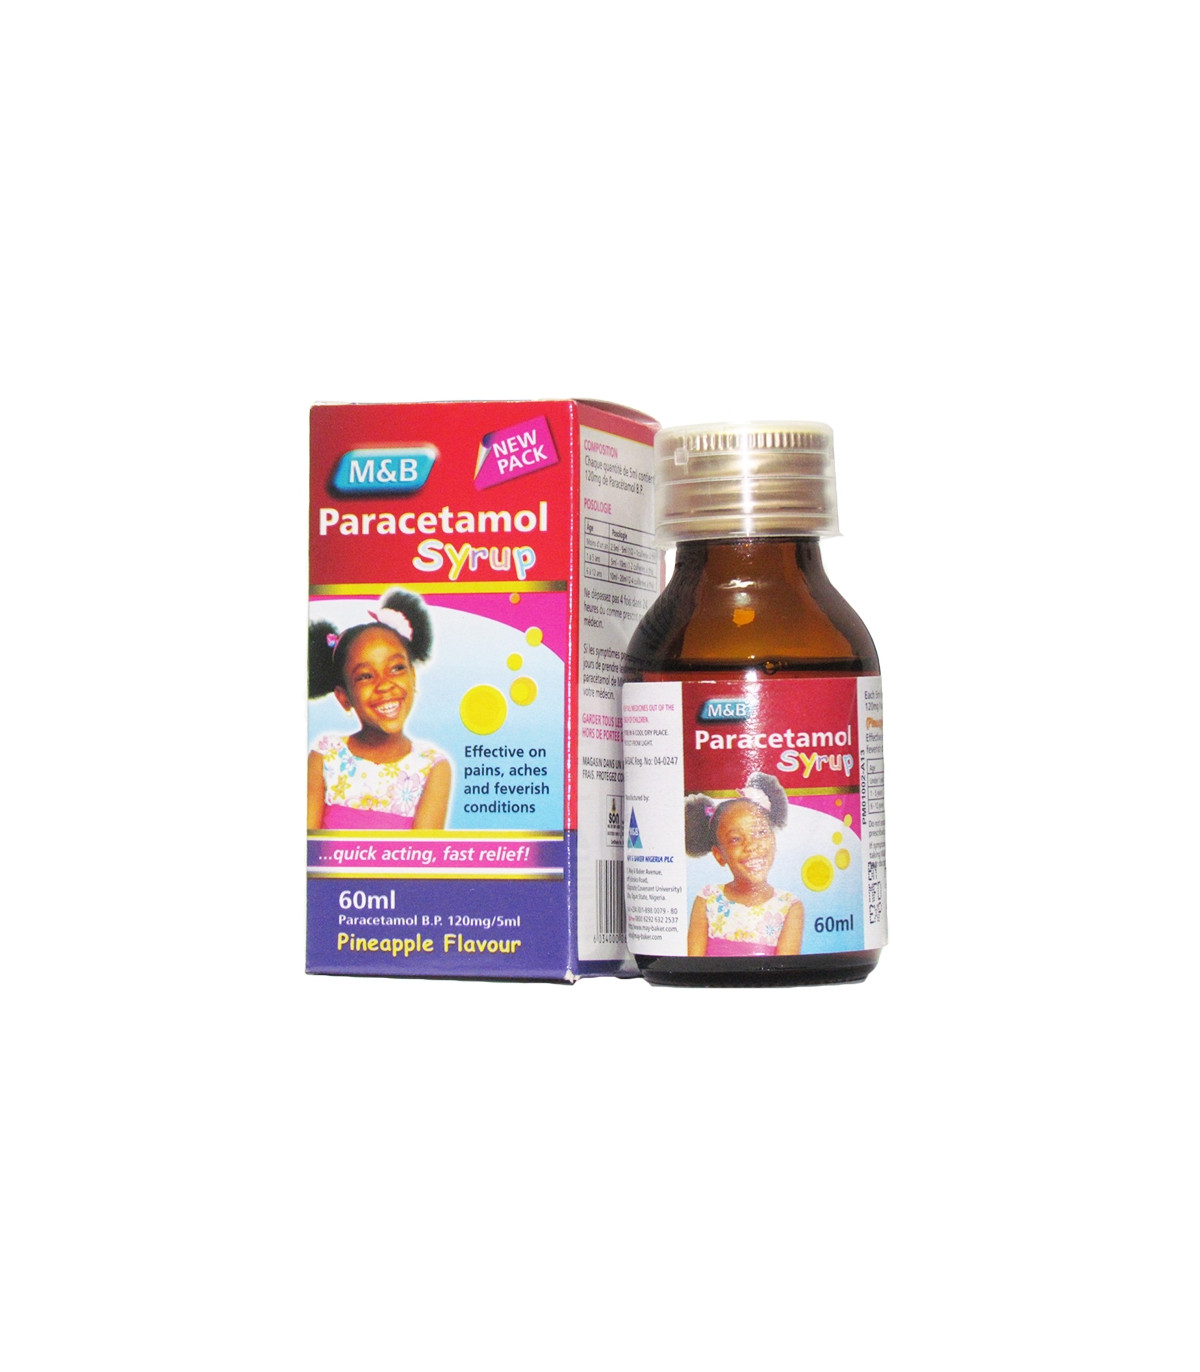 M&B Paracetamol Syrup - 60ml